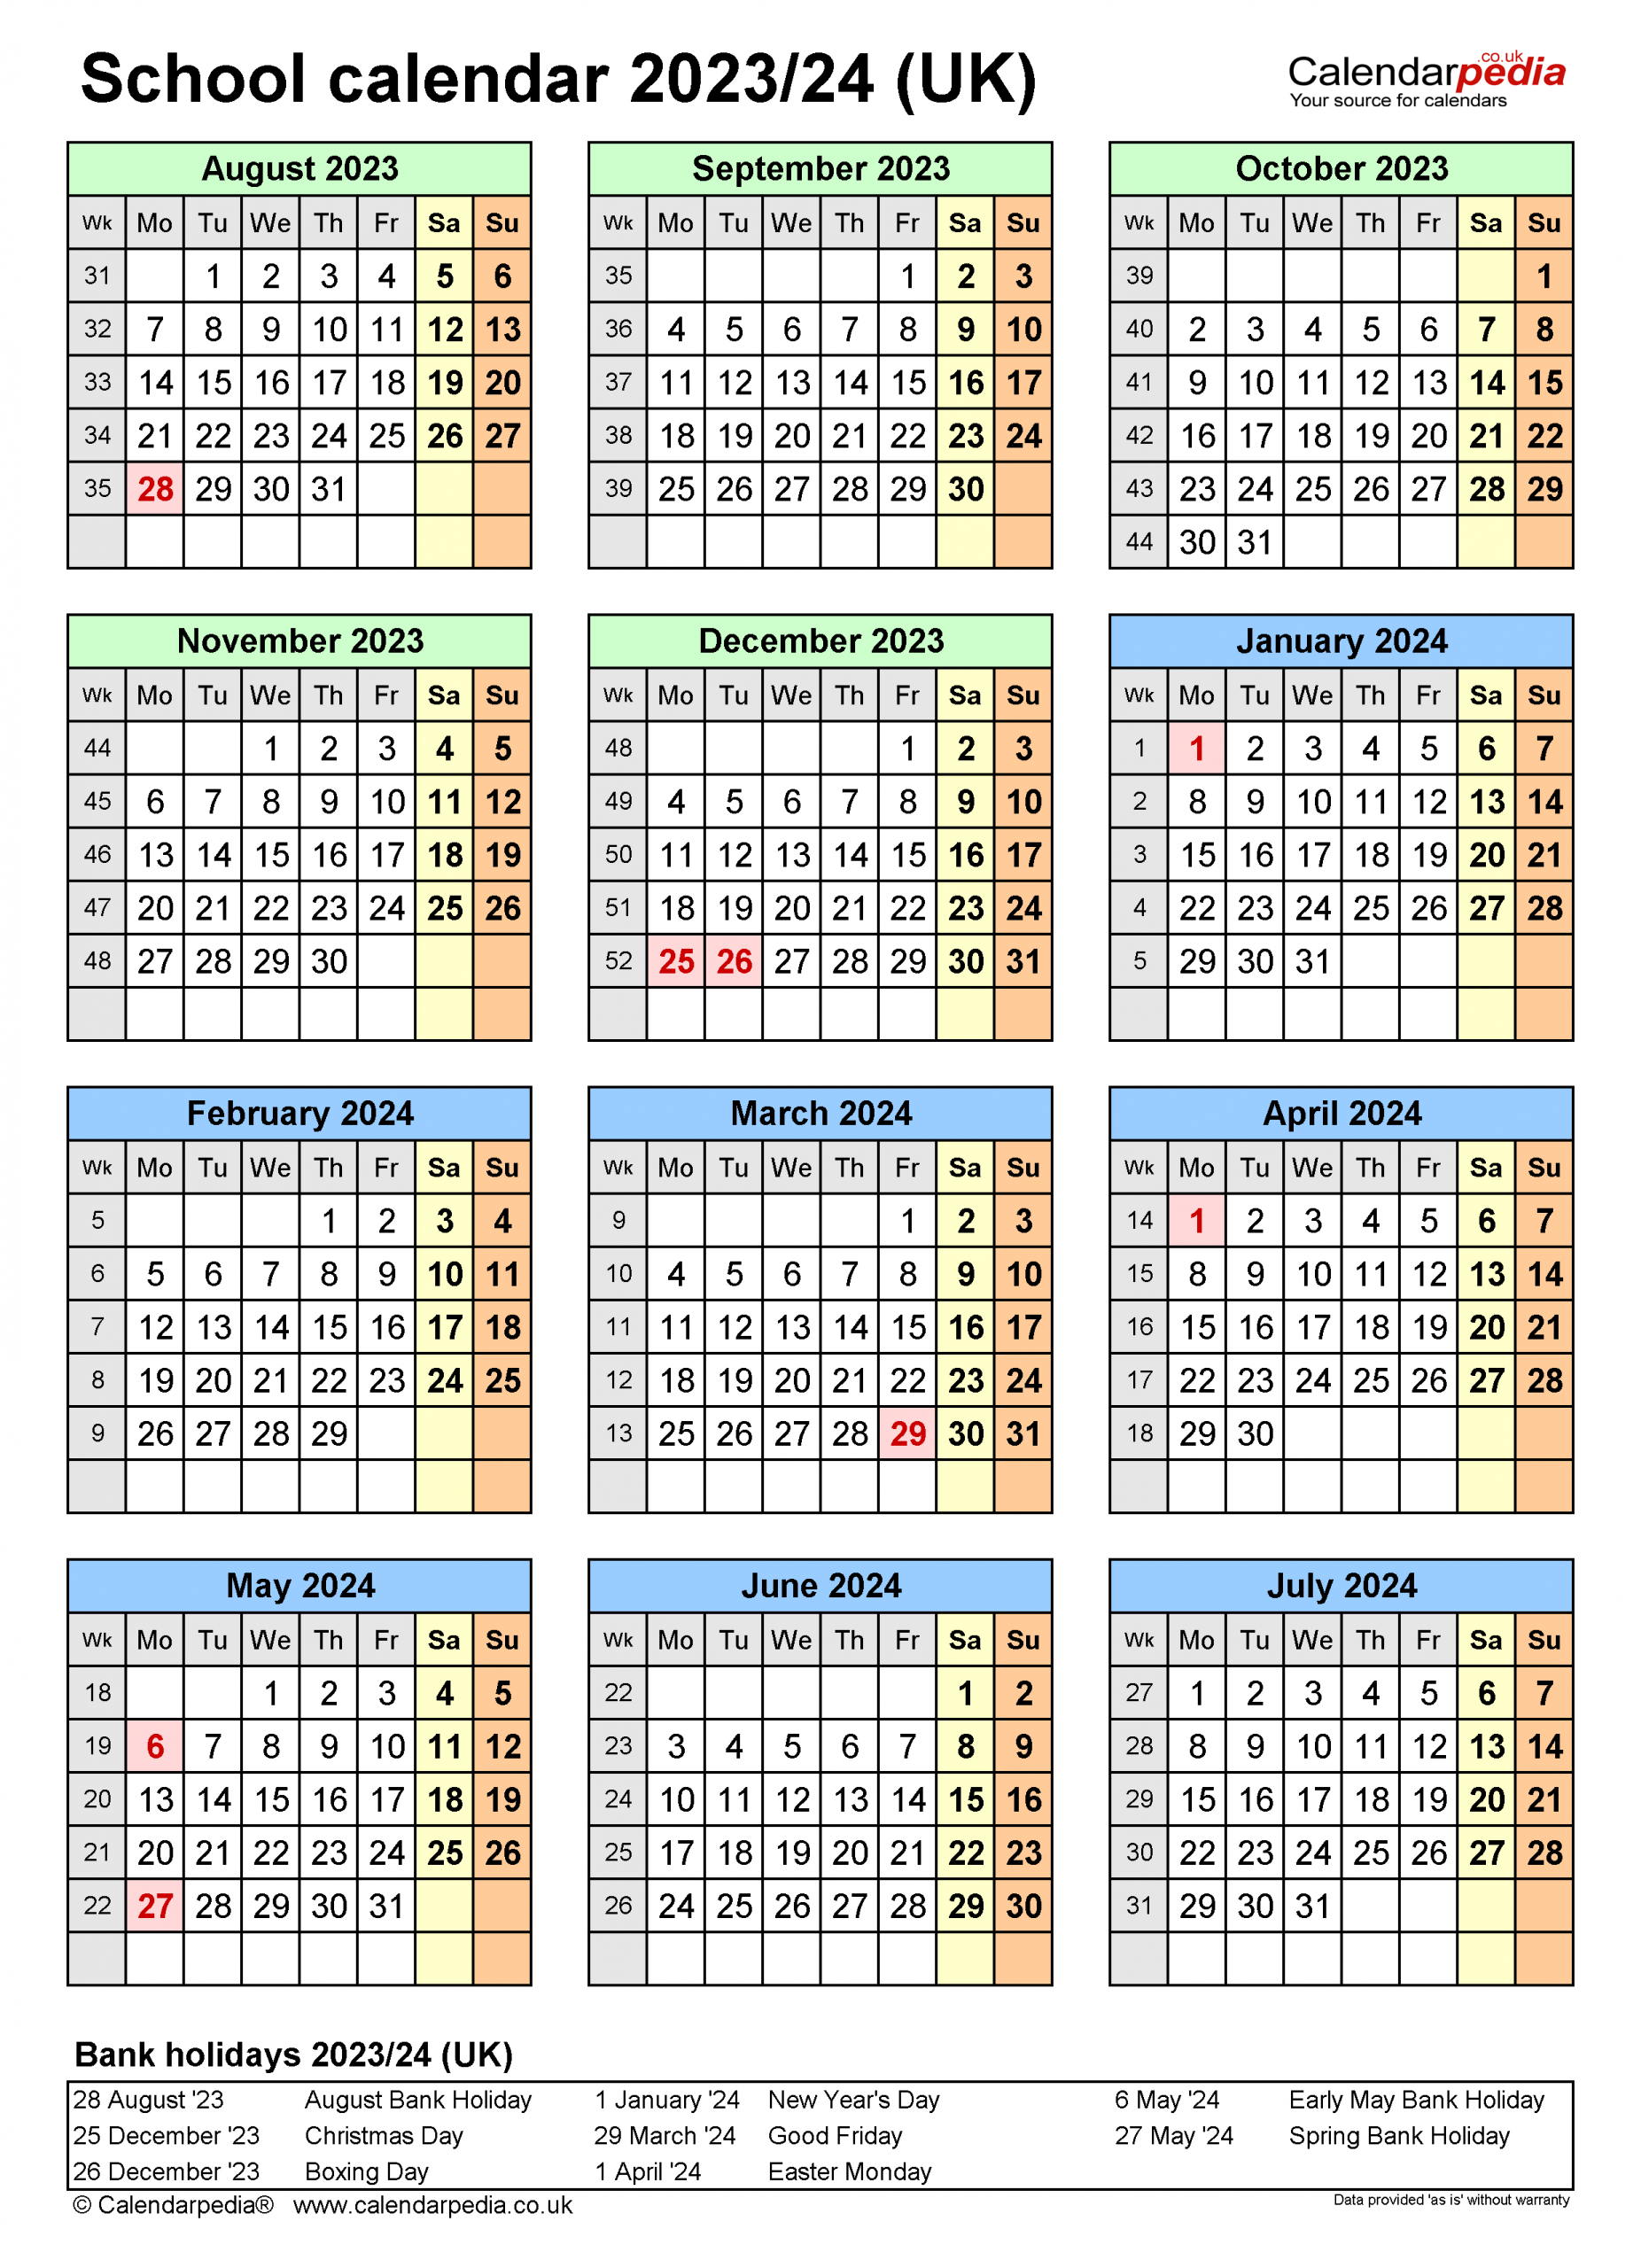 School Calendars 2023/24 Uk - Free Printable Pdf Templates Blank Calendar School Term